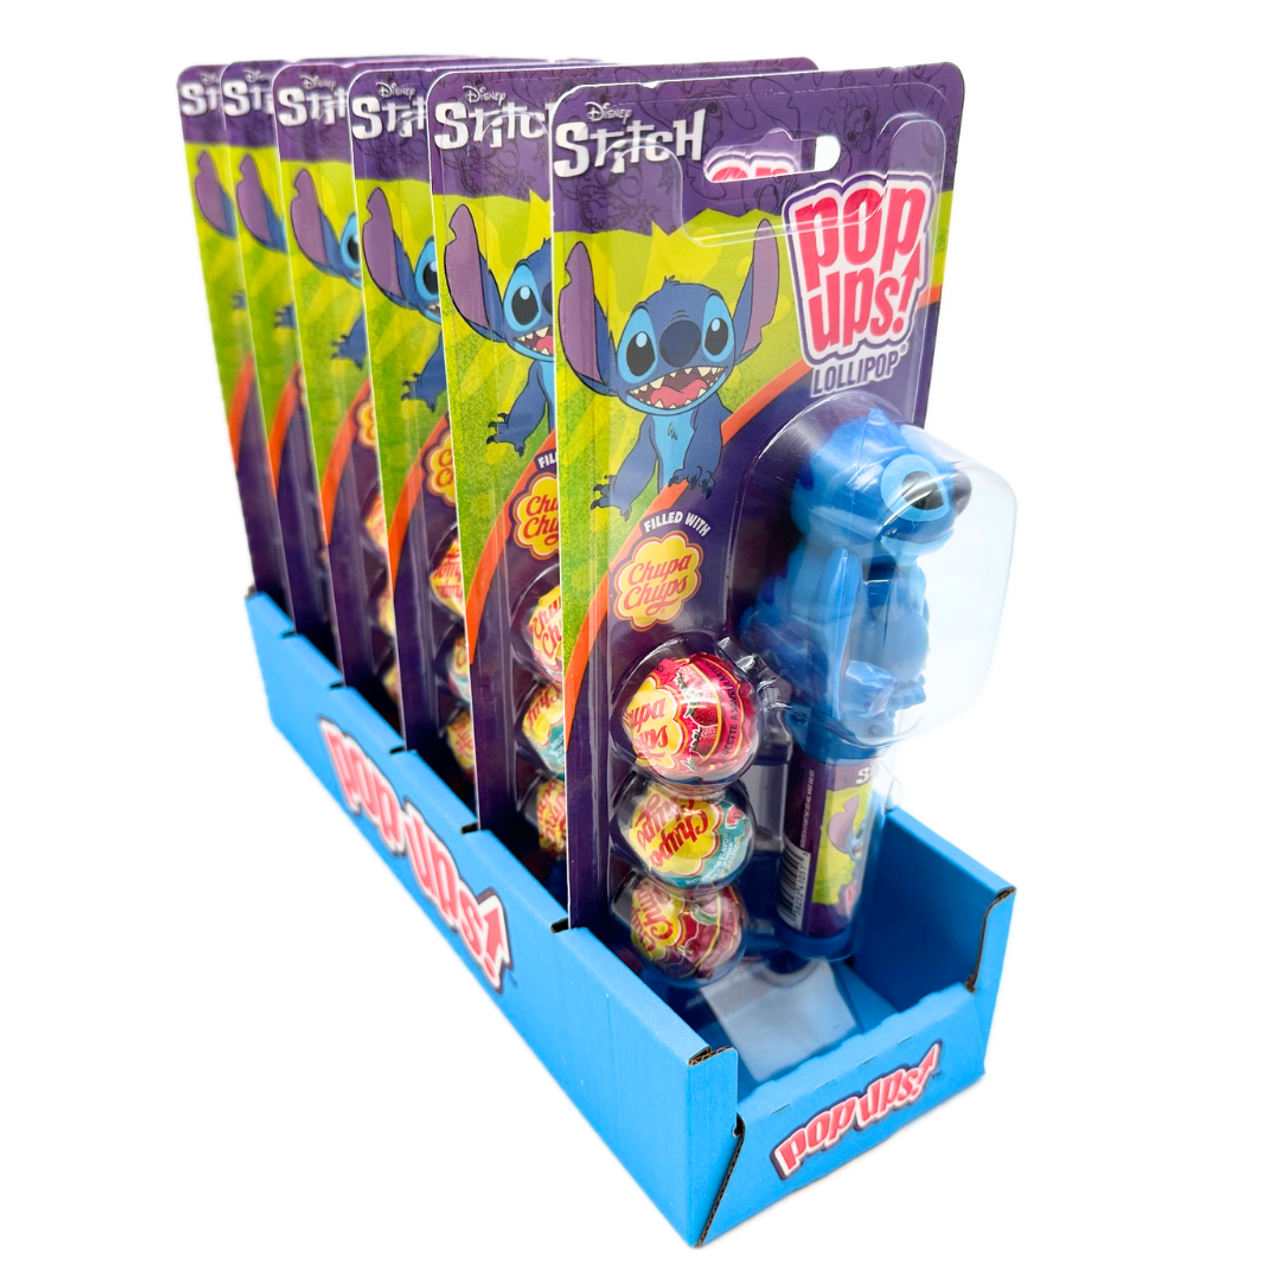 Lilo & Stitch Pop Ups Lollipop - 6ct